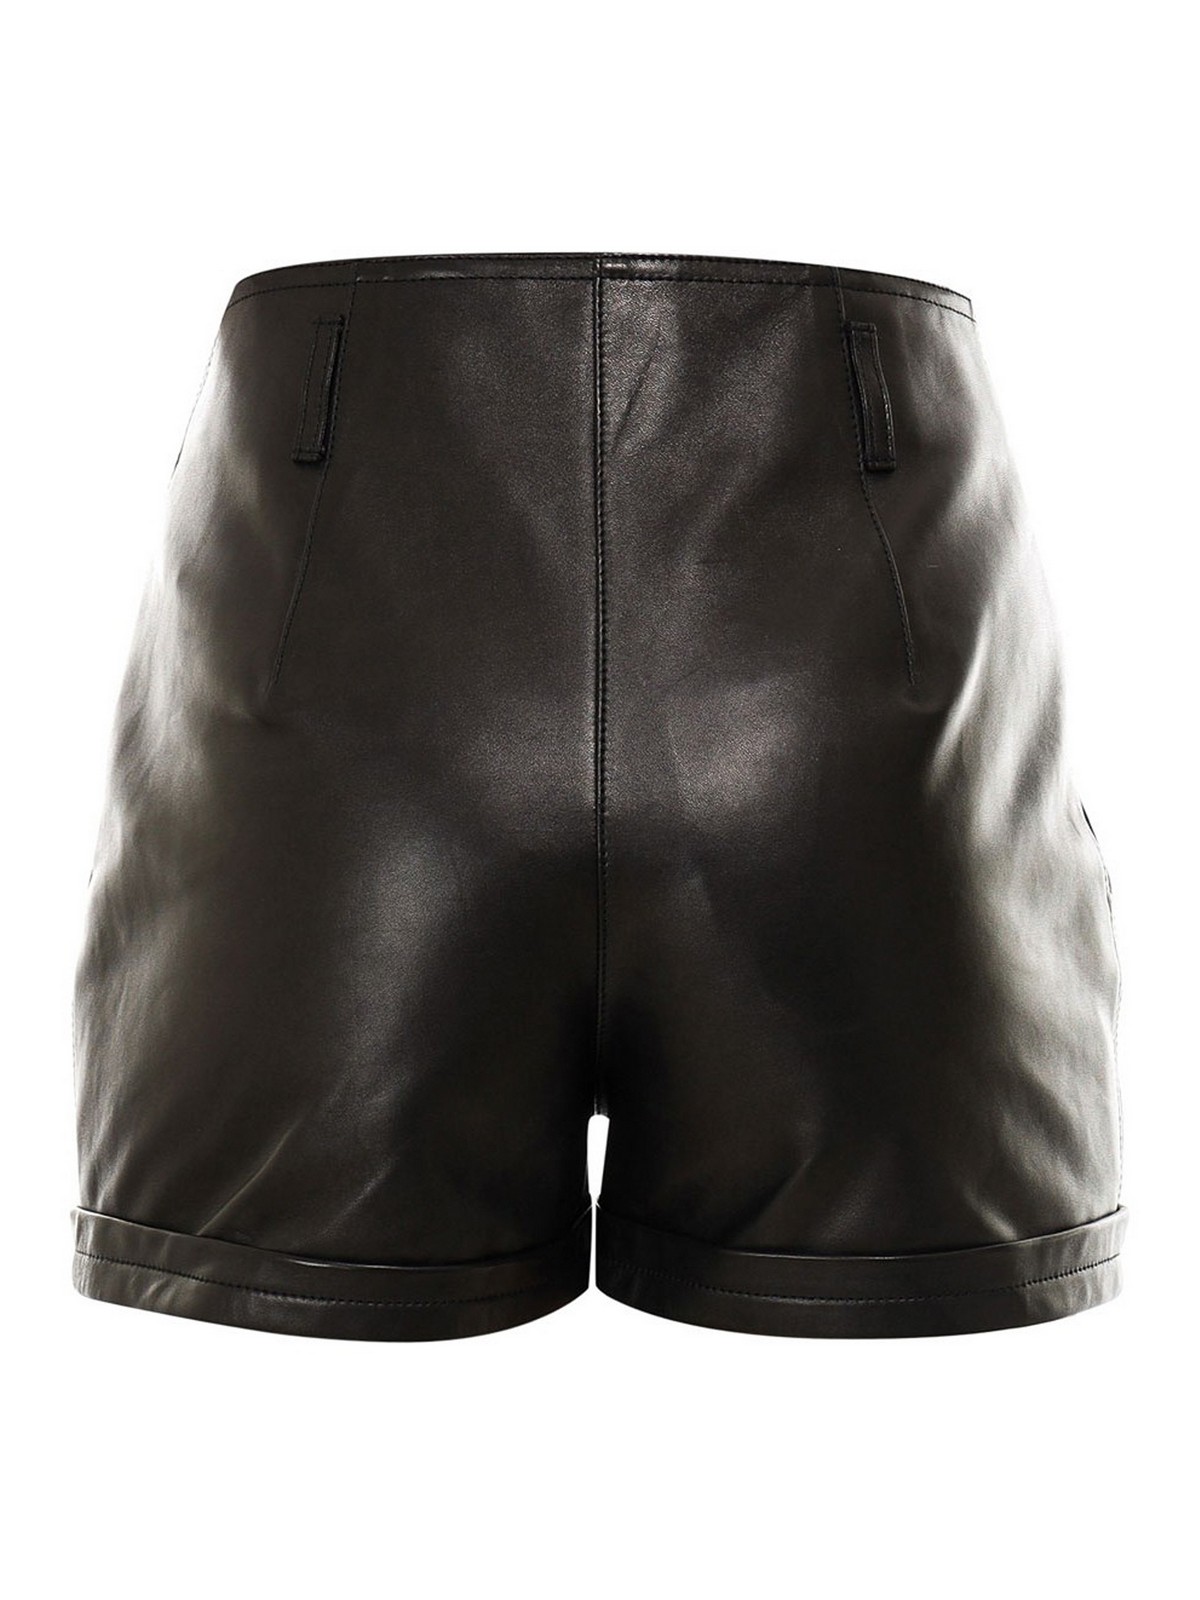 Leather trousers Saint Laurent - Leather shorts - 630200YC2ZZ1000